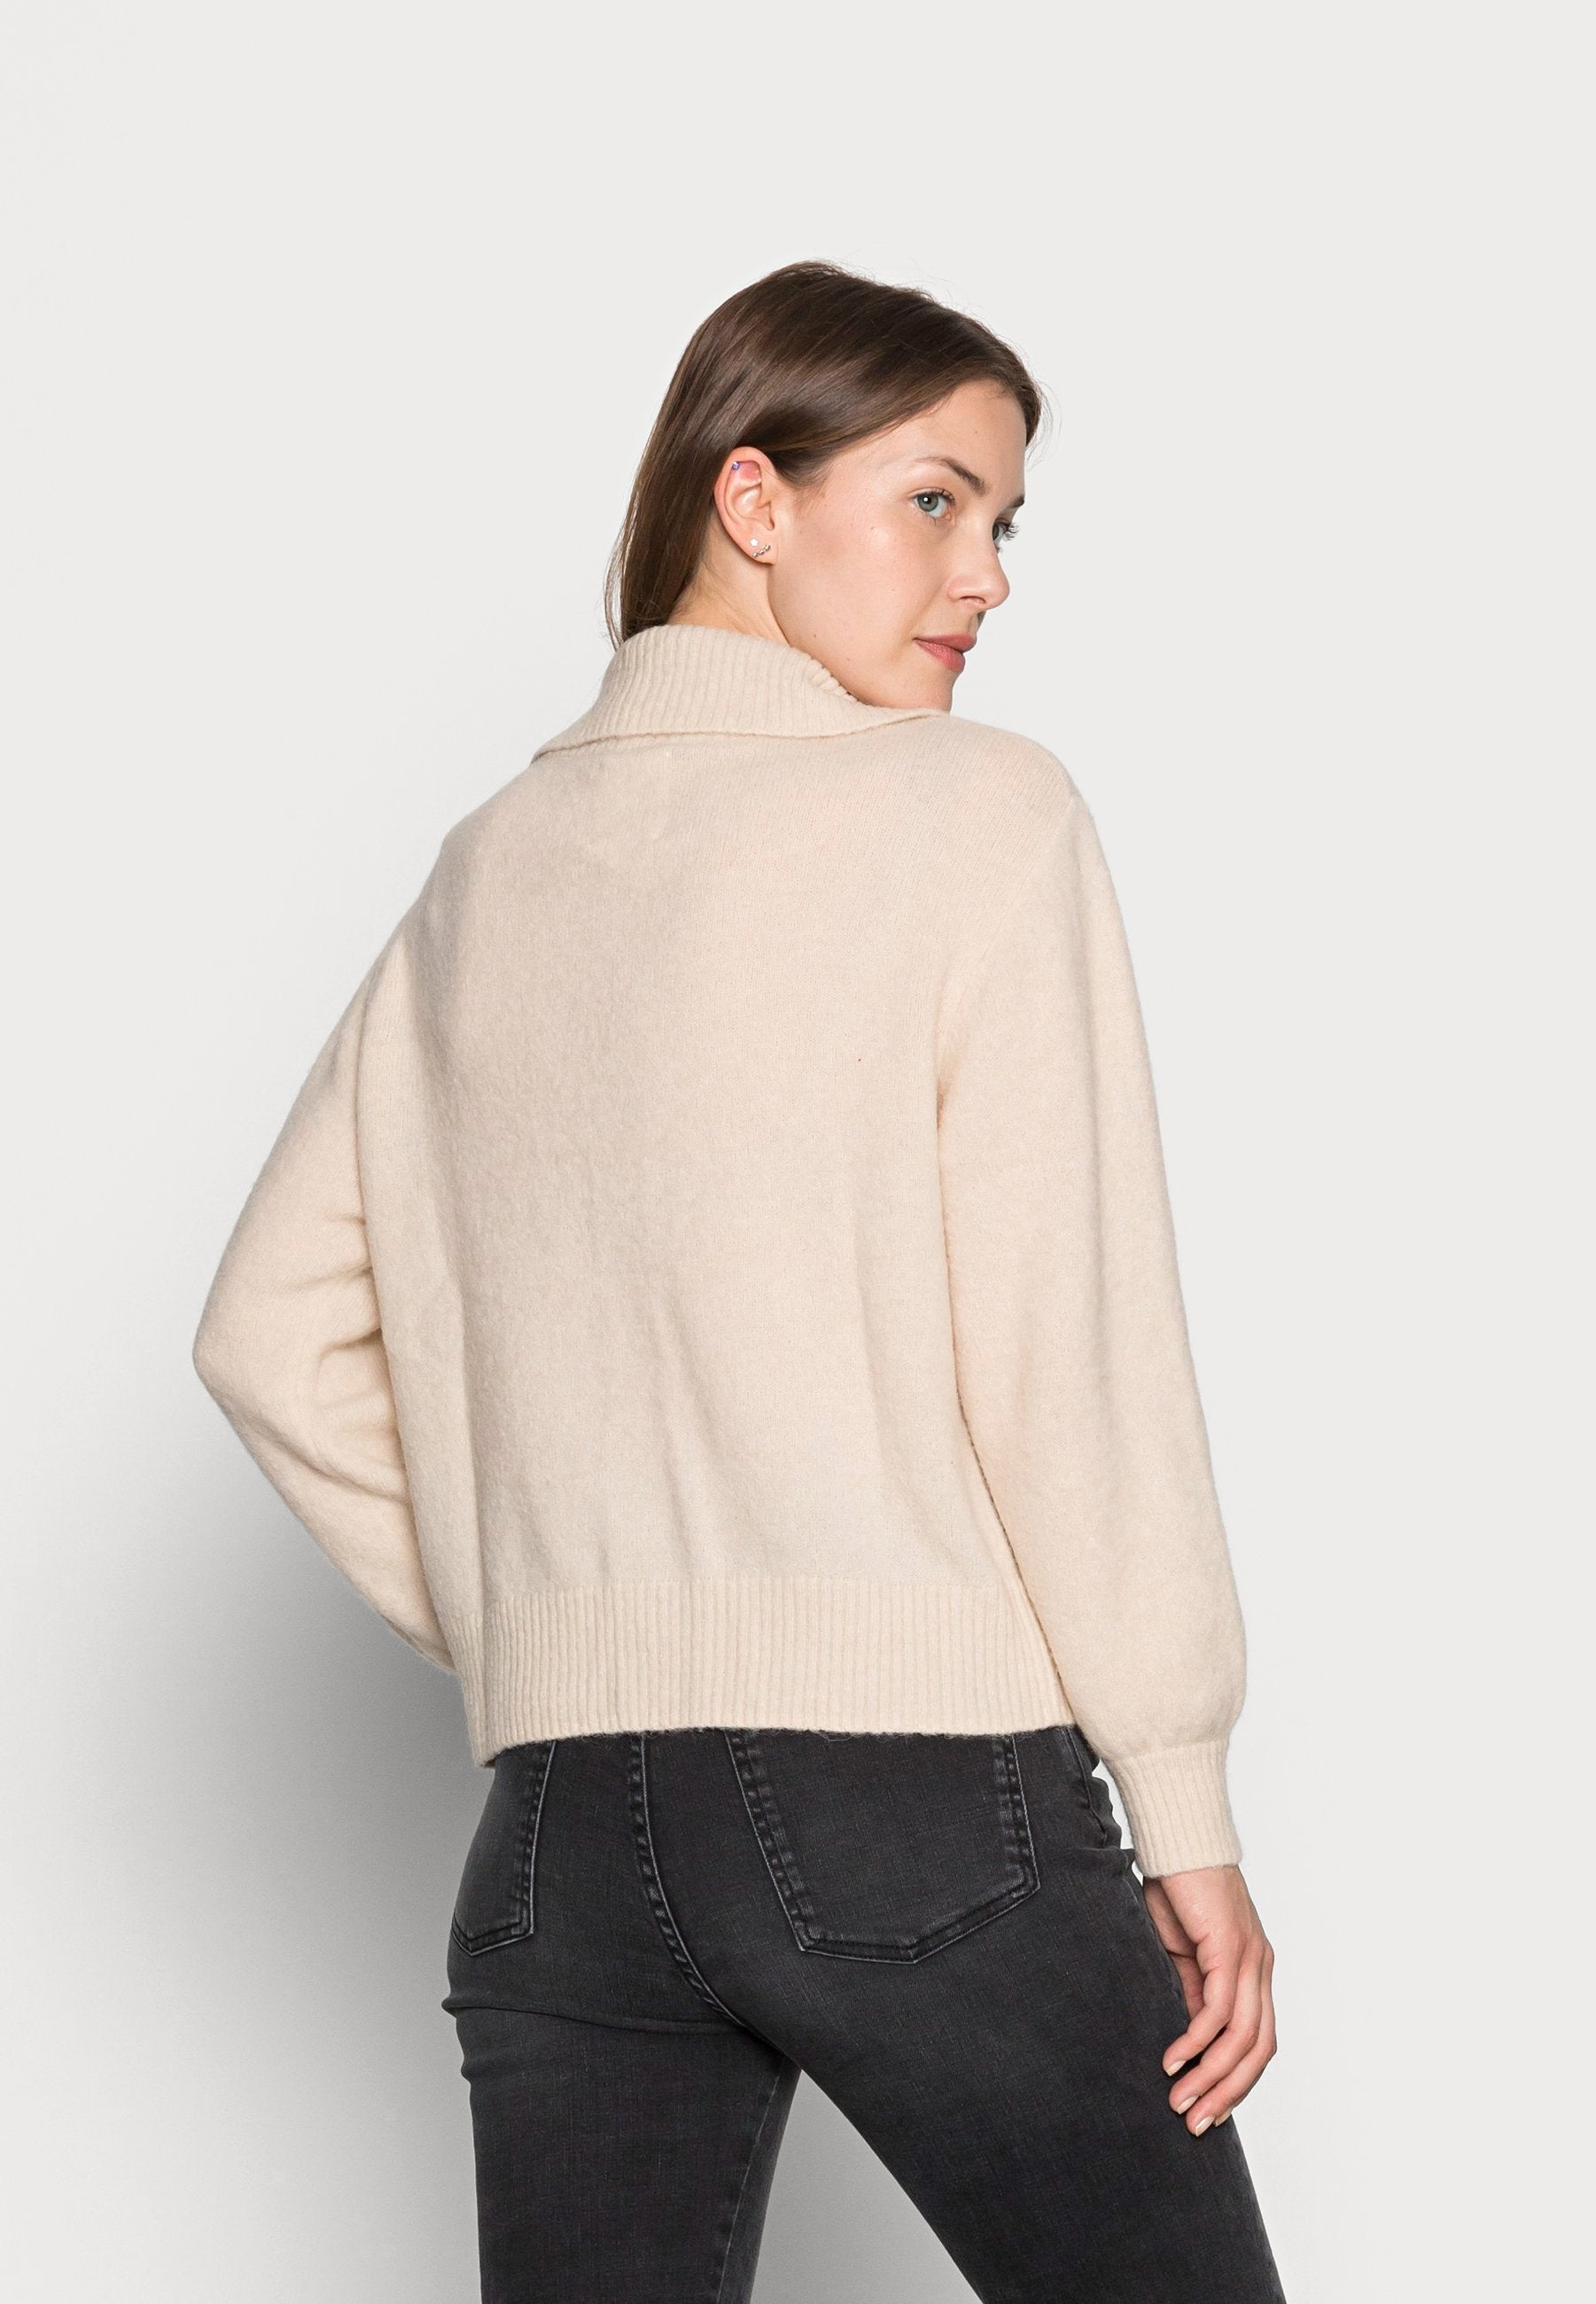 Kaje Knitted Pullover - Grey / Beige